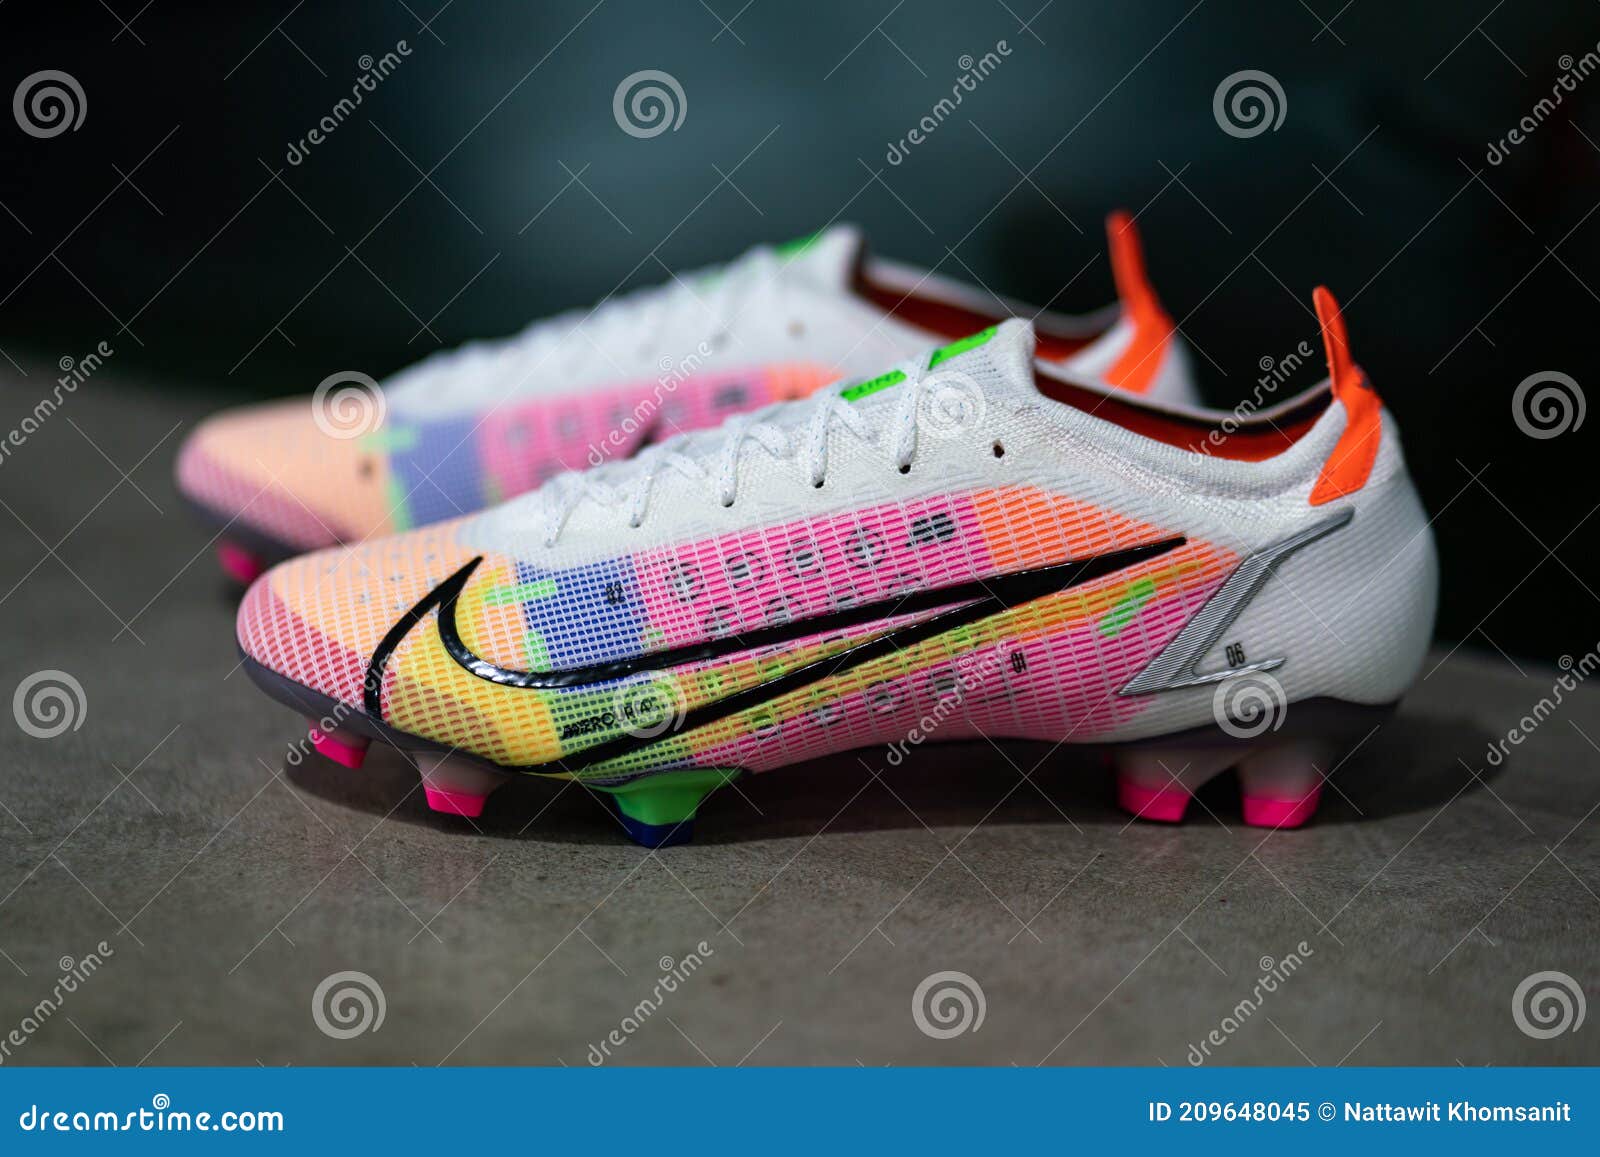 nike multicolor football boots